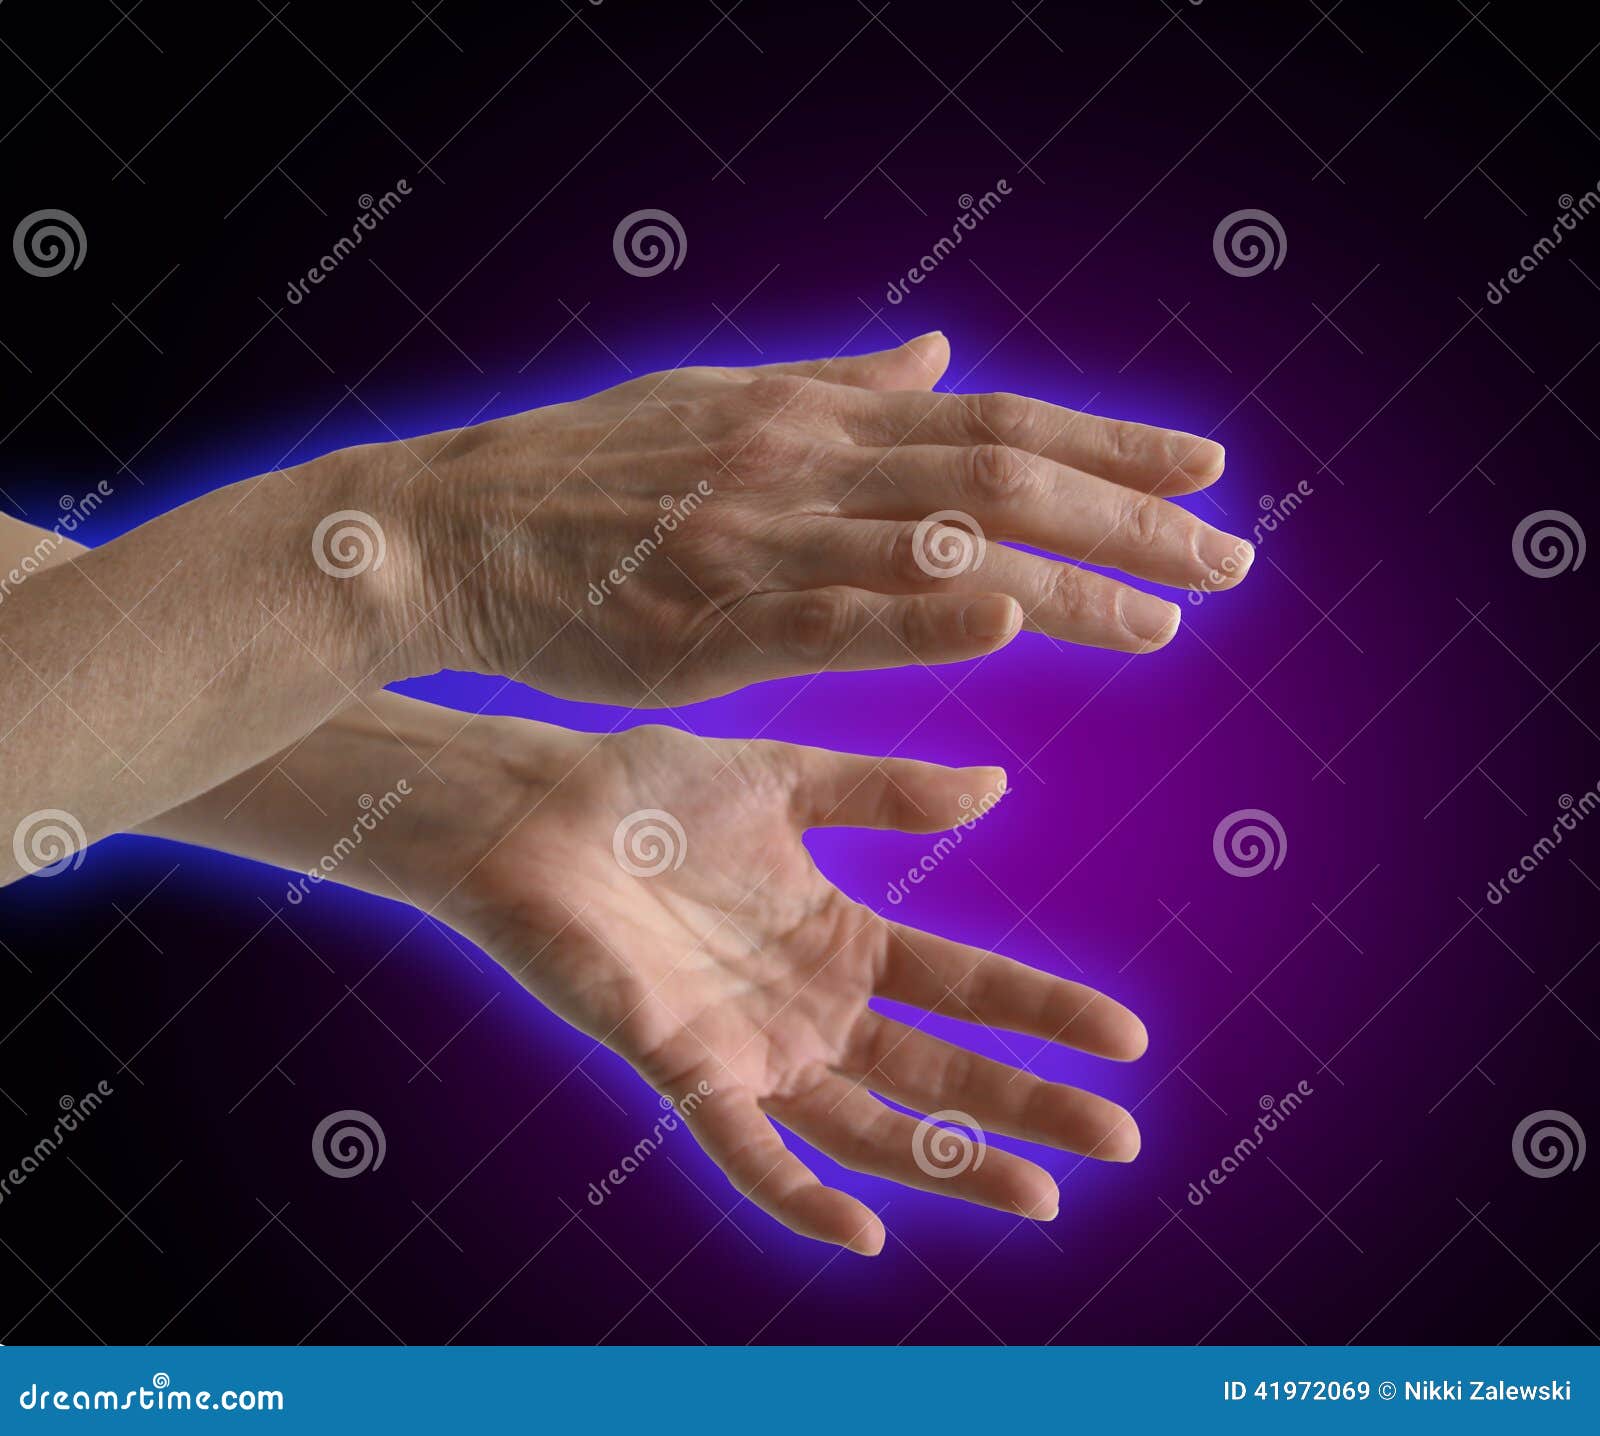 electromagnetic aura around healer's hands